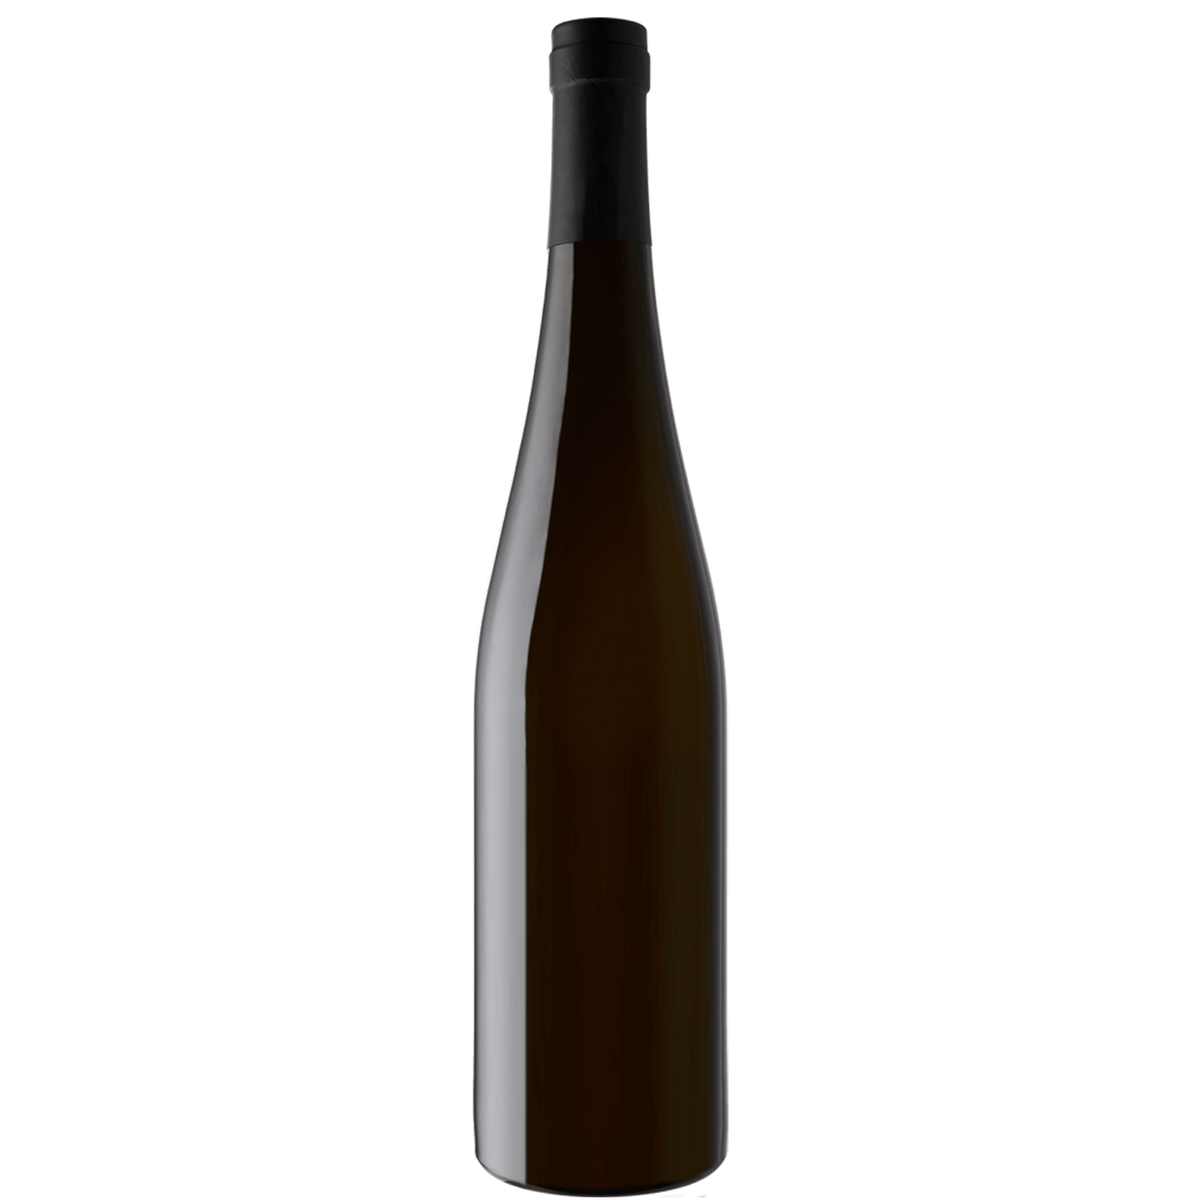 Vin blanc allemand sec - Nahe Region - Domaine Emrich-Schonleber - Riesling